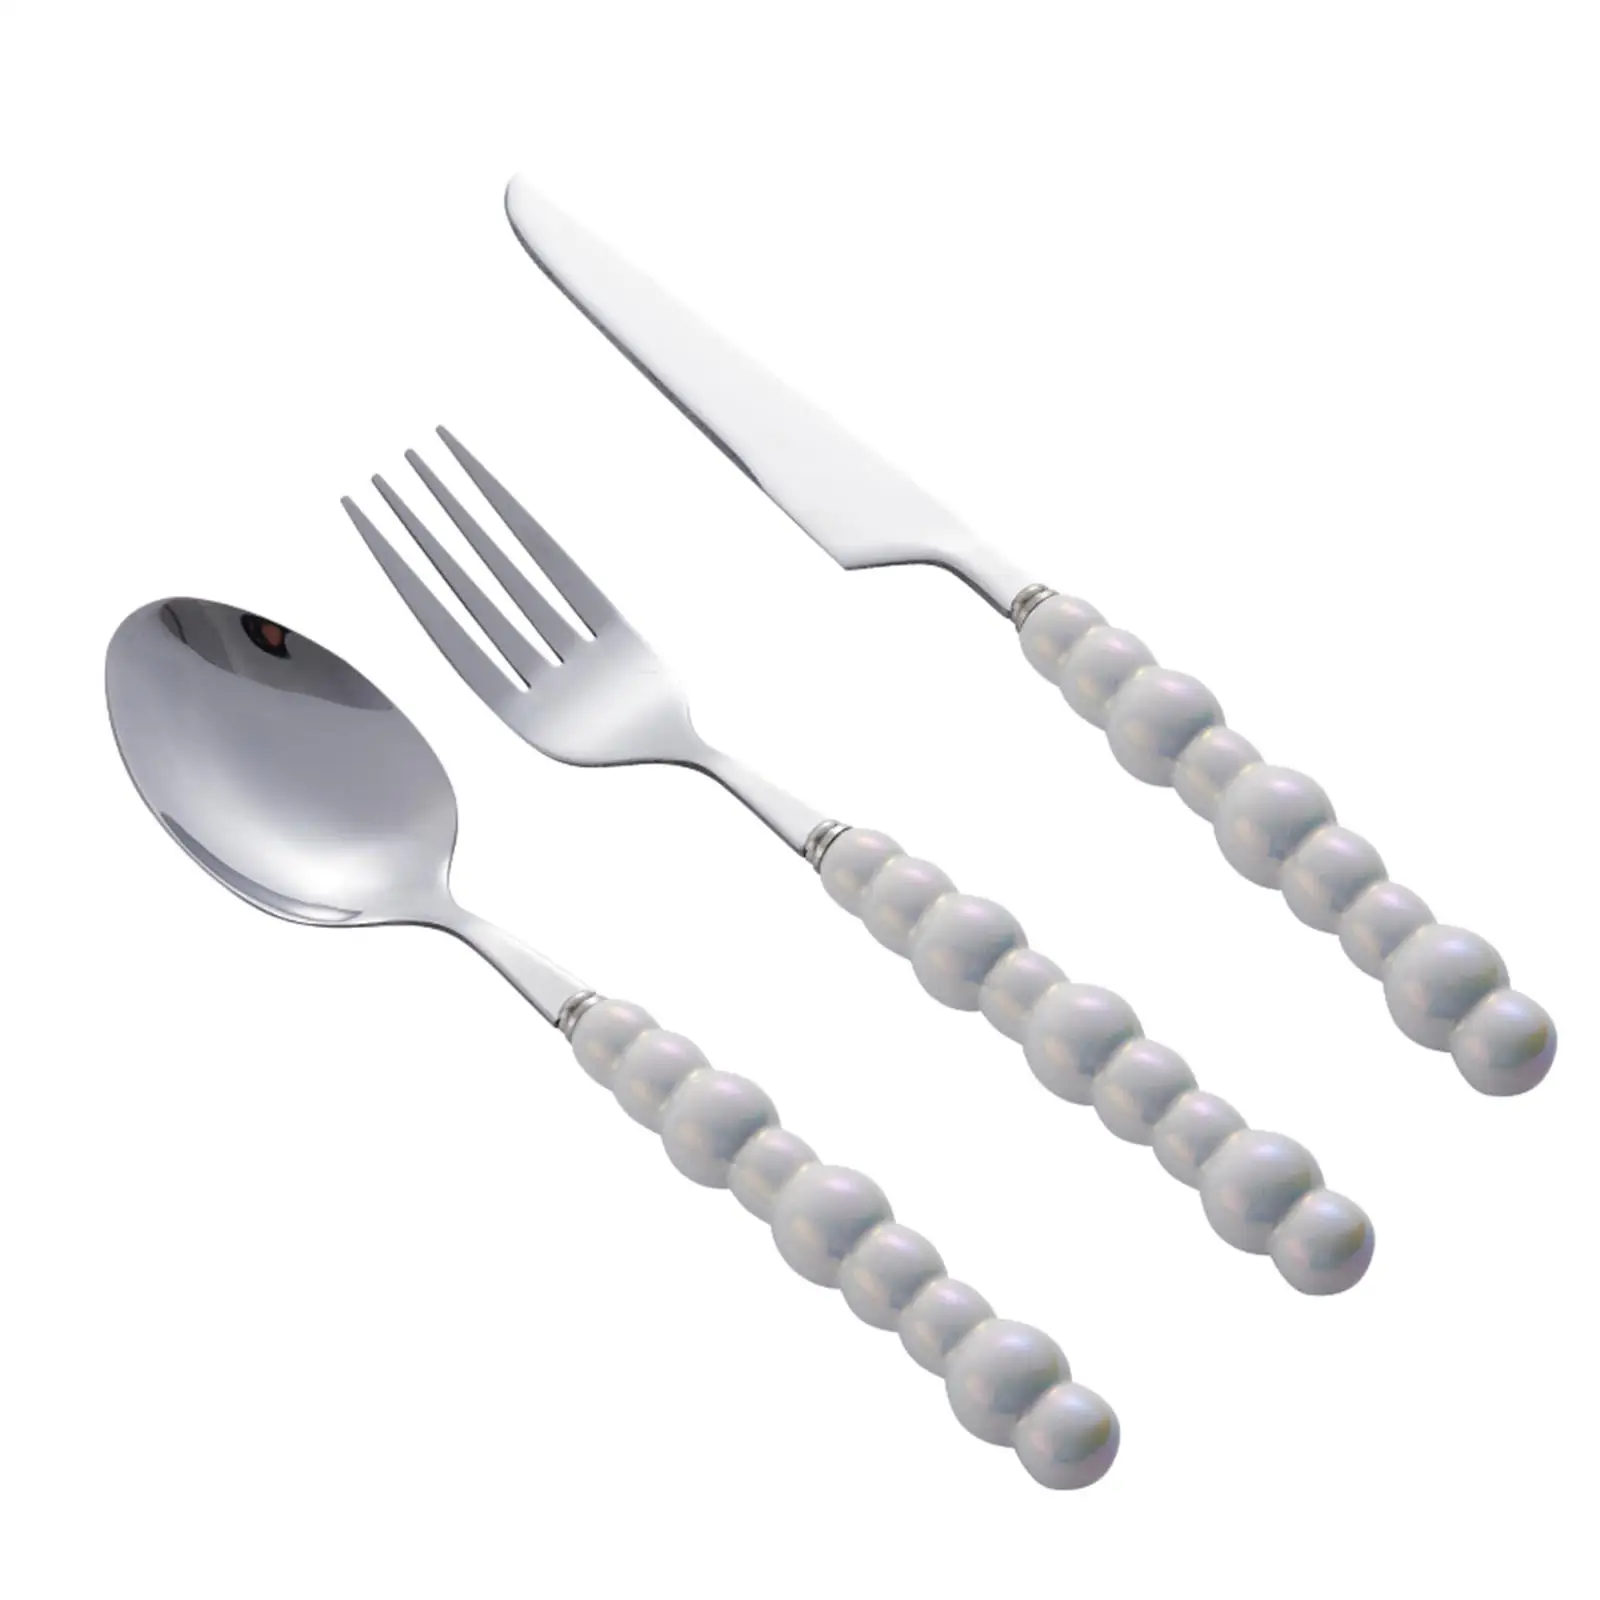 3 Pieces Silverware Set Luxury Kitchen Utensils Service Stainless Steel Flatware Cutlery Set for Holiday Home Restaurant Hotel